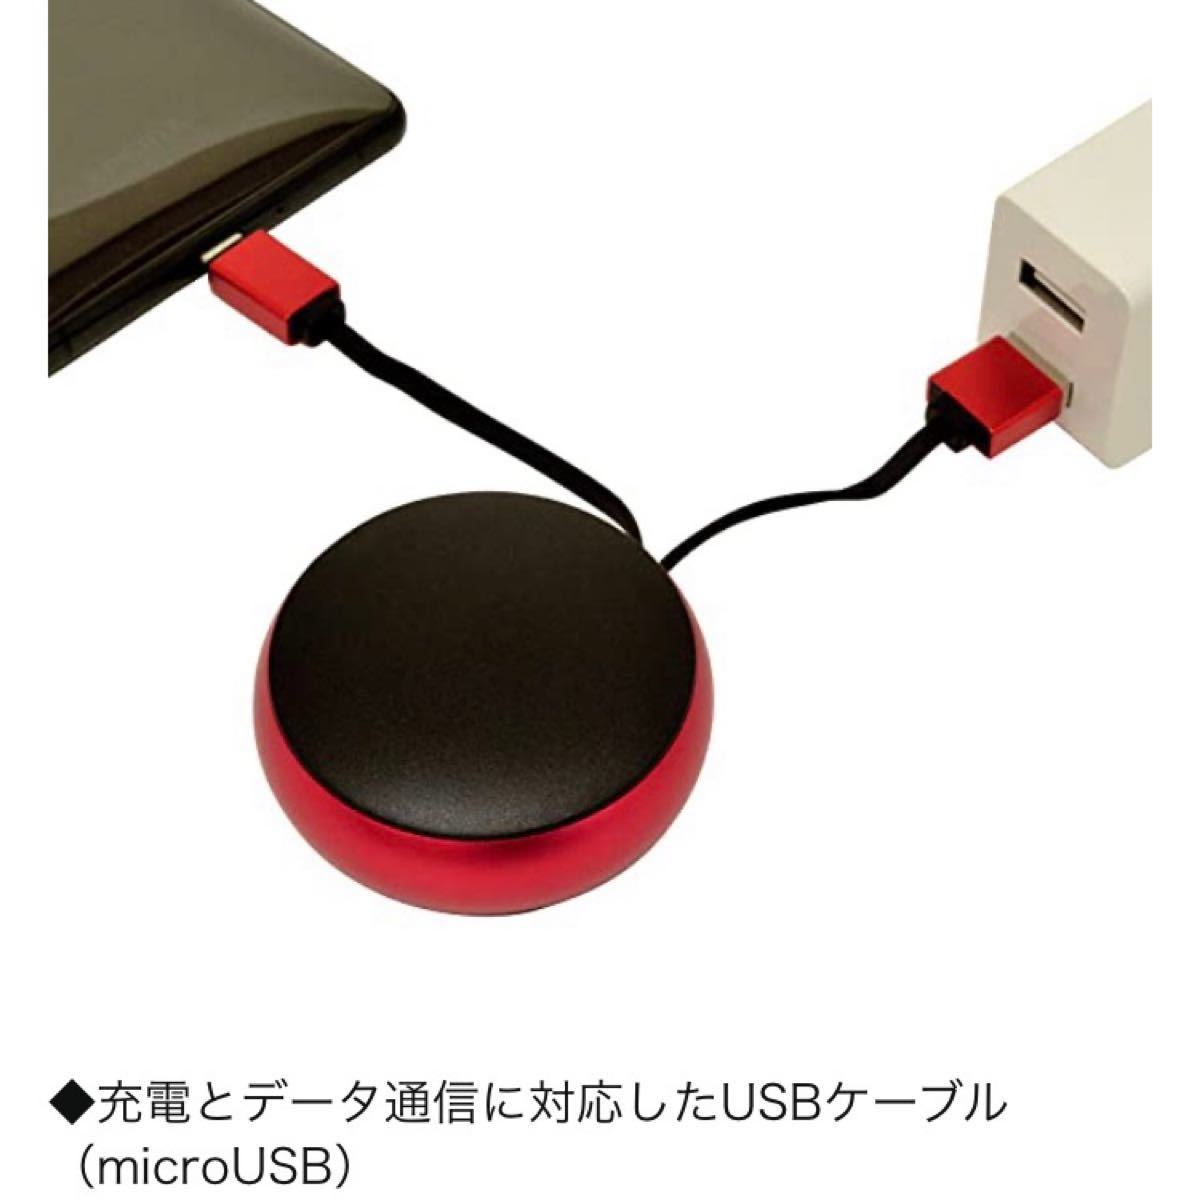 microUSB USB スマホ/タブレット 充電・通信 巻き取りケーブル 2.4A 80cm マイクロUSB SV x BK 